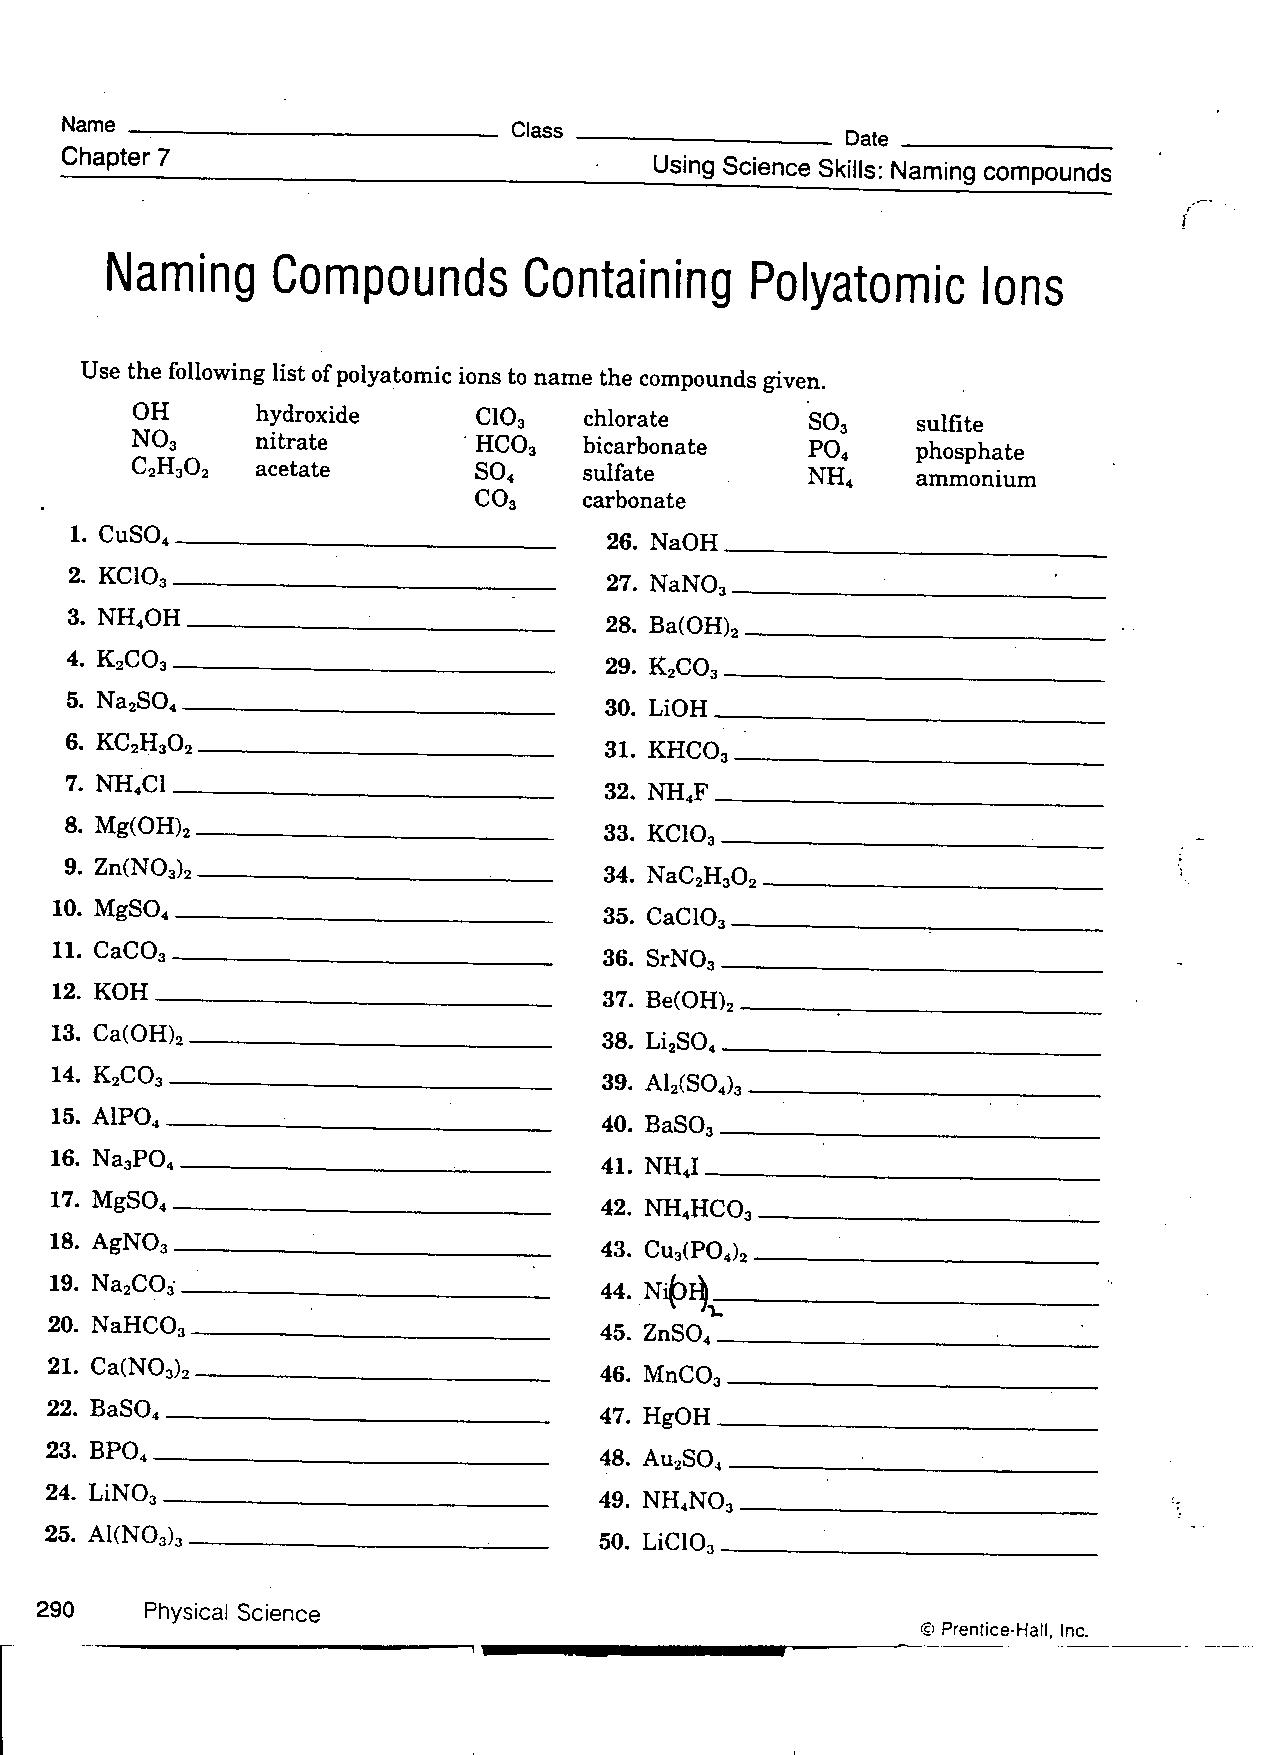 Polyatomic Ions - Harrisburg Chemistry Presents: Regarding Polyatomic Ions Worksheet Answers